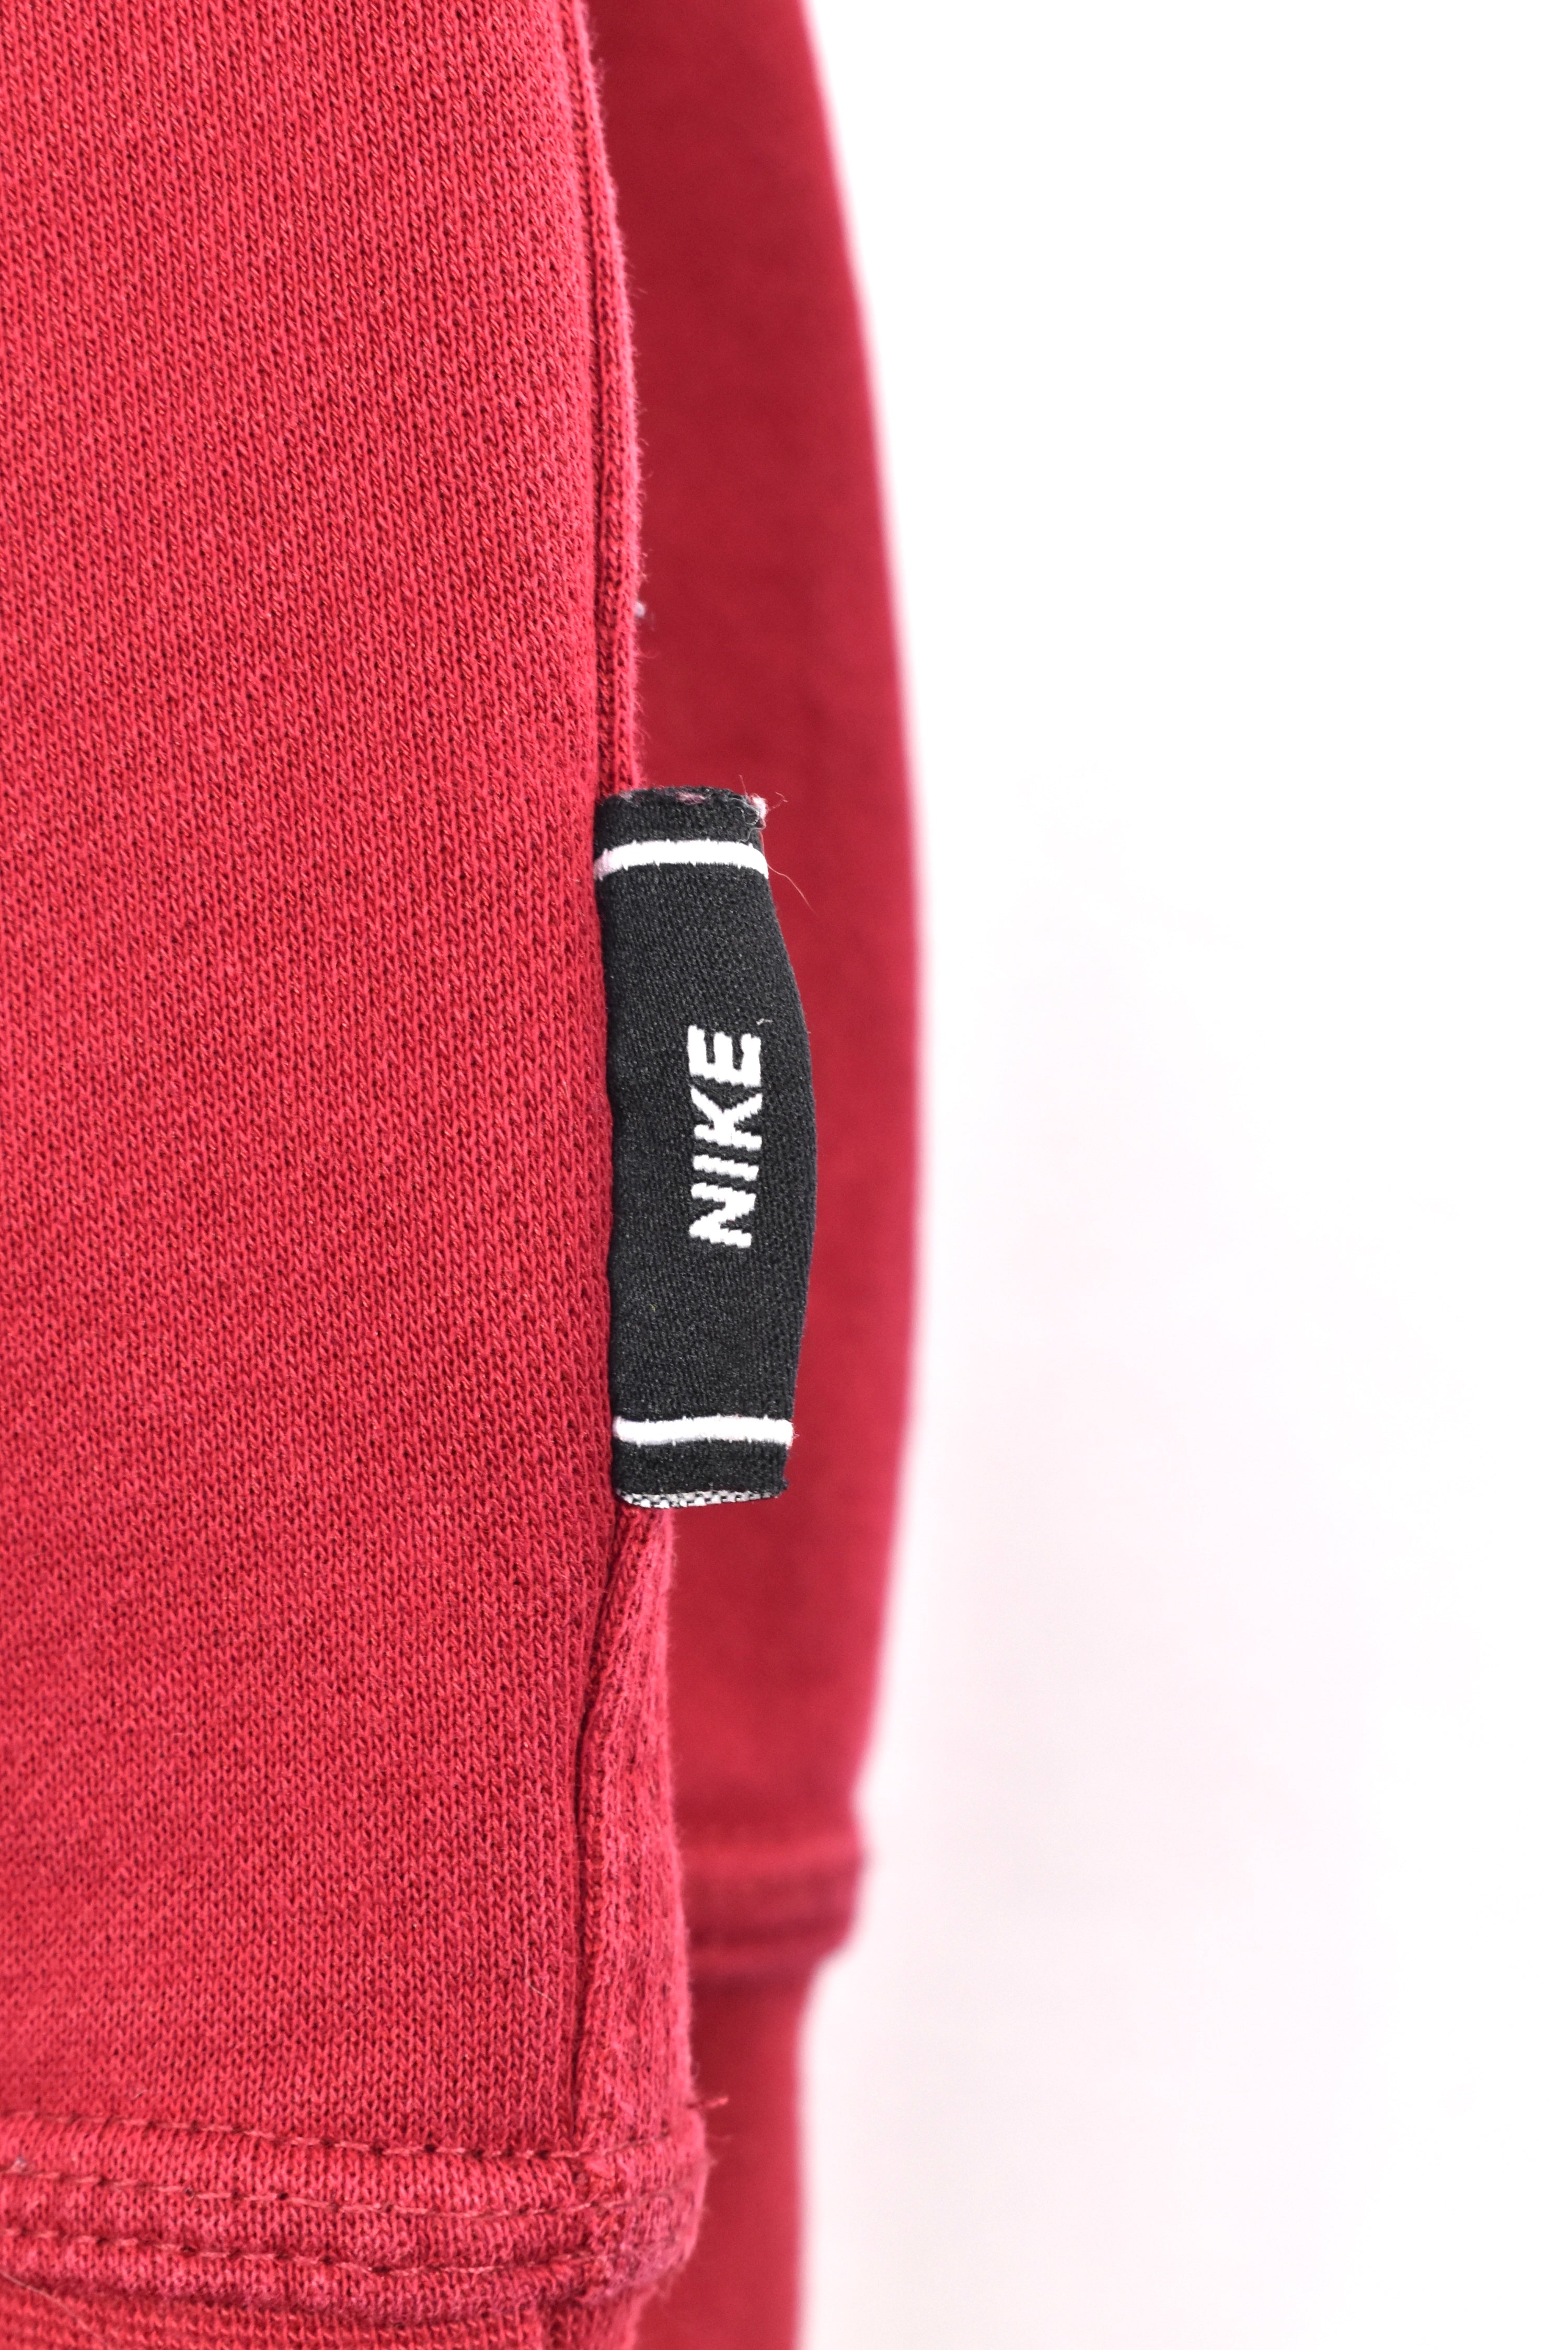 Vintage Nike sweatshirt, AS ROMA soccer graphic sweatshirt - medium, red NIKE